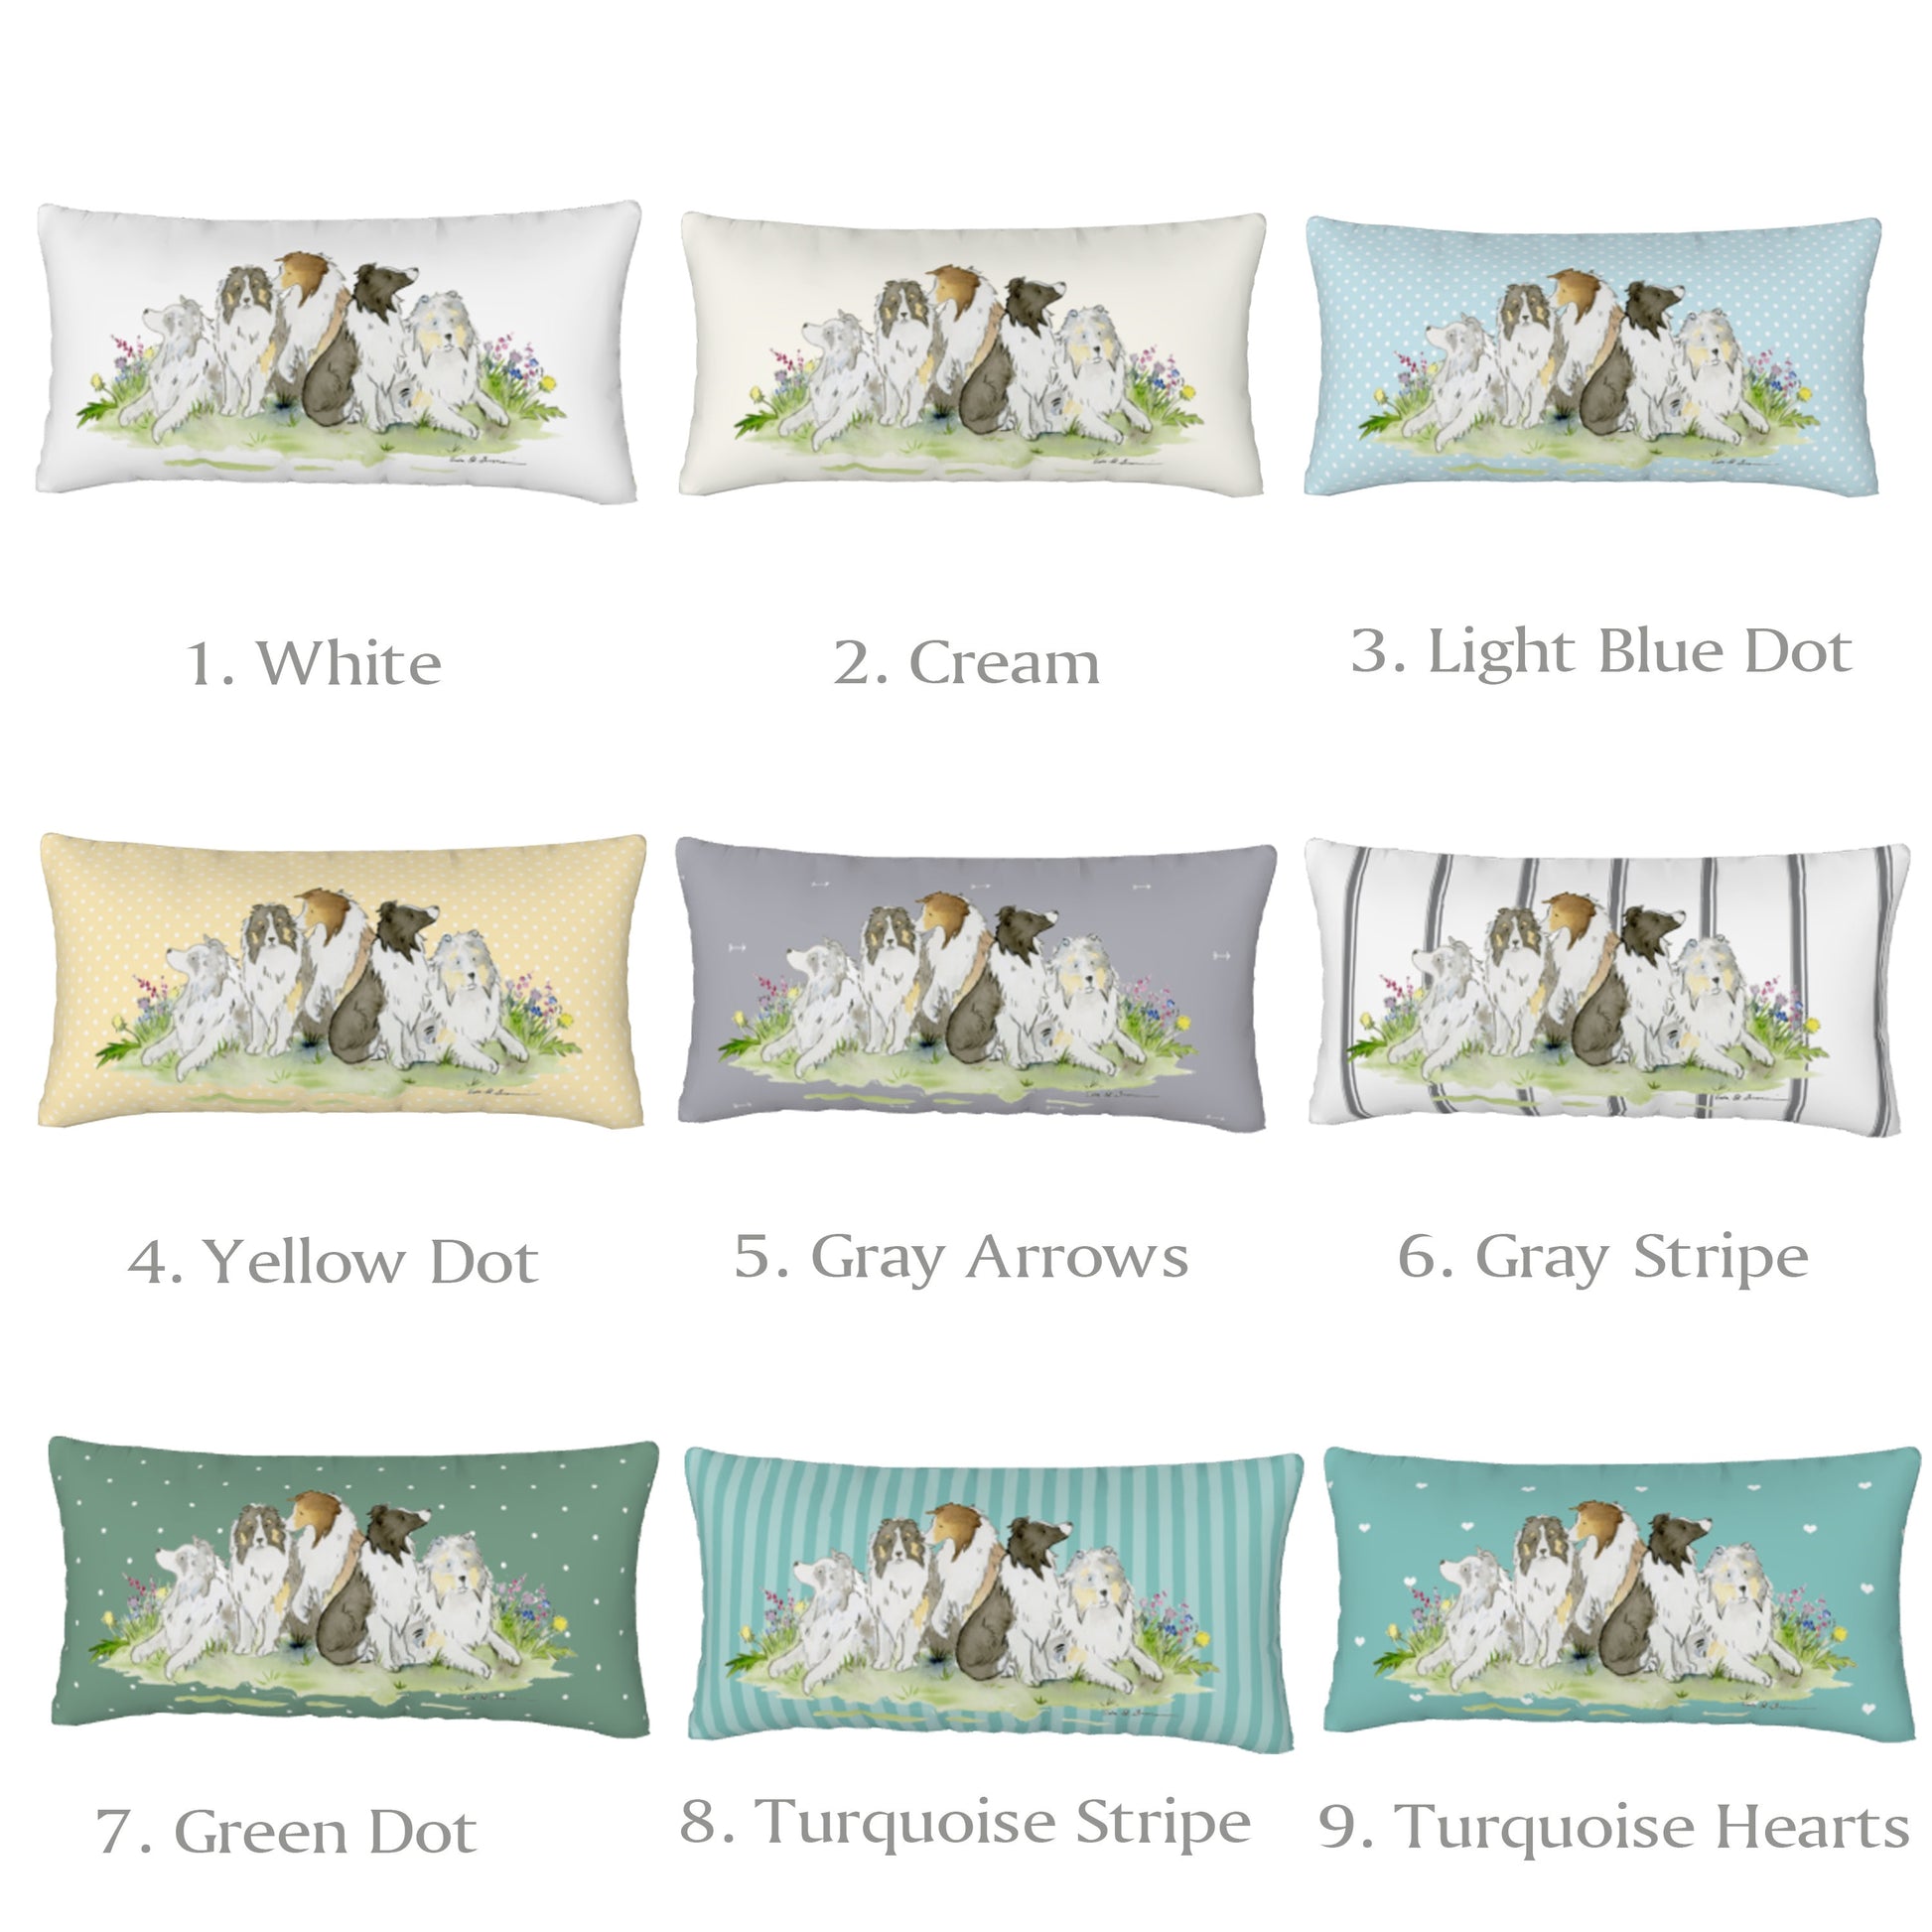 Sheltie Pillow Cover, shetland sheepdog pillow case, lumbar pillow cover, tri color, blue merle, sable sheltie gift, sheltie decor, dog gift